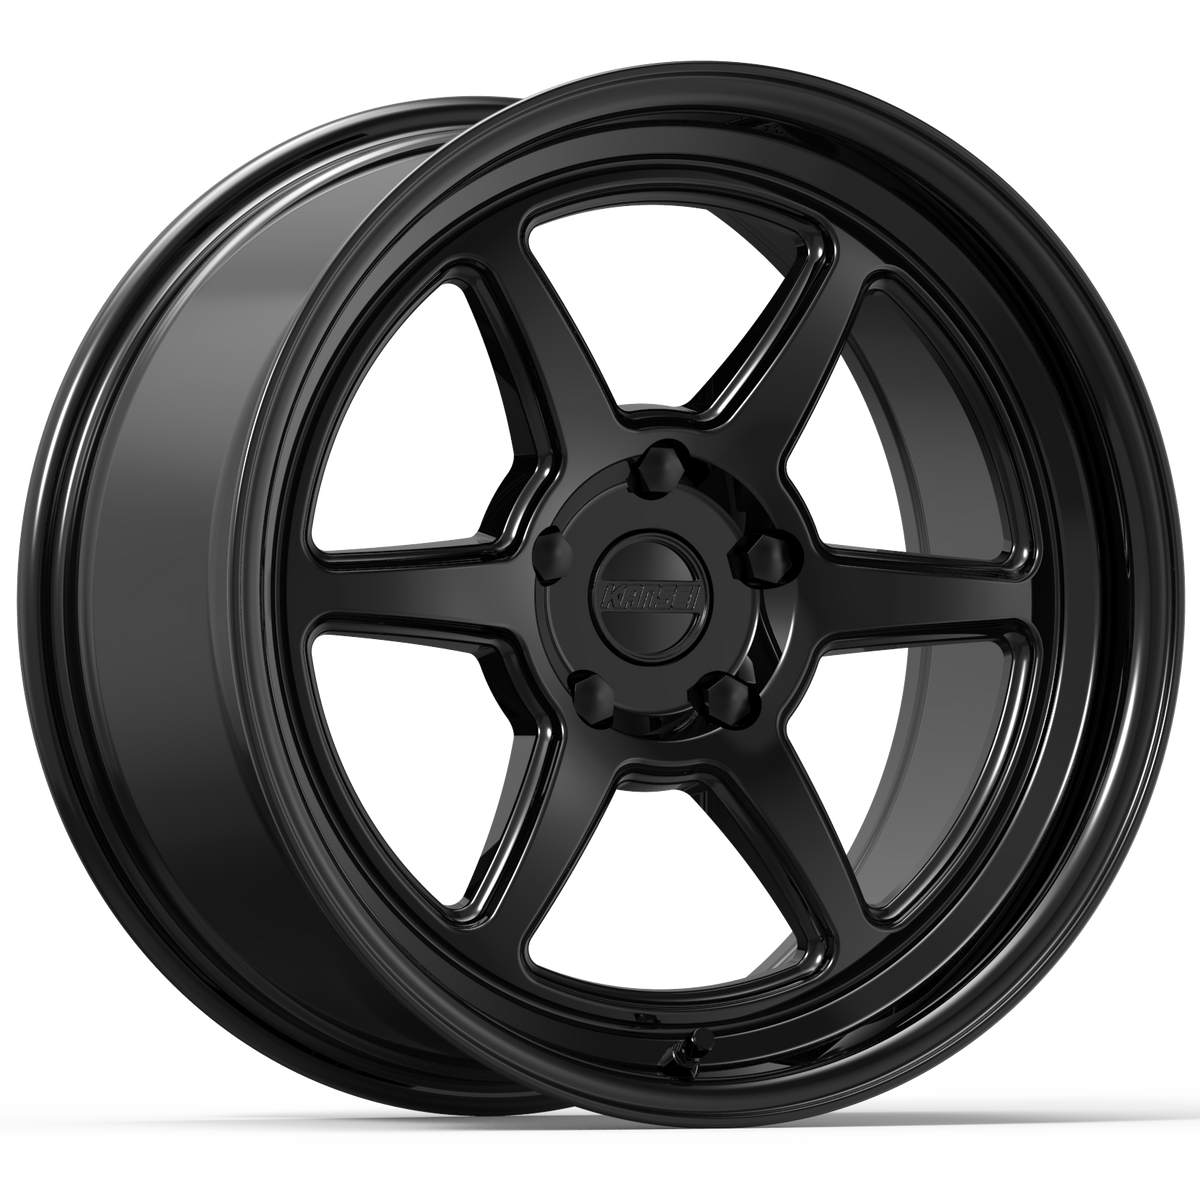 K14B ROKU Wheel, Size: 18" x 9.50", Bolt Pattern: 5 x 110 mm, Backspace: 6.75" [Finish: Gloss Black]